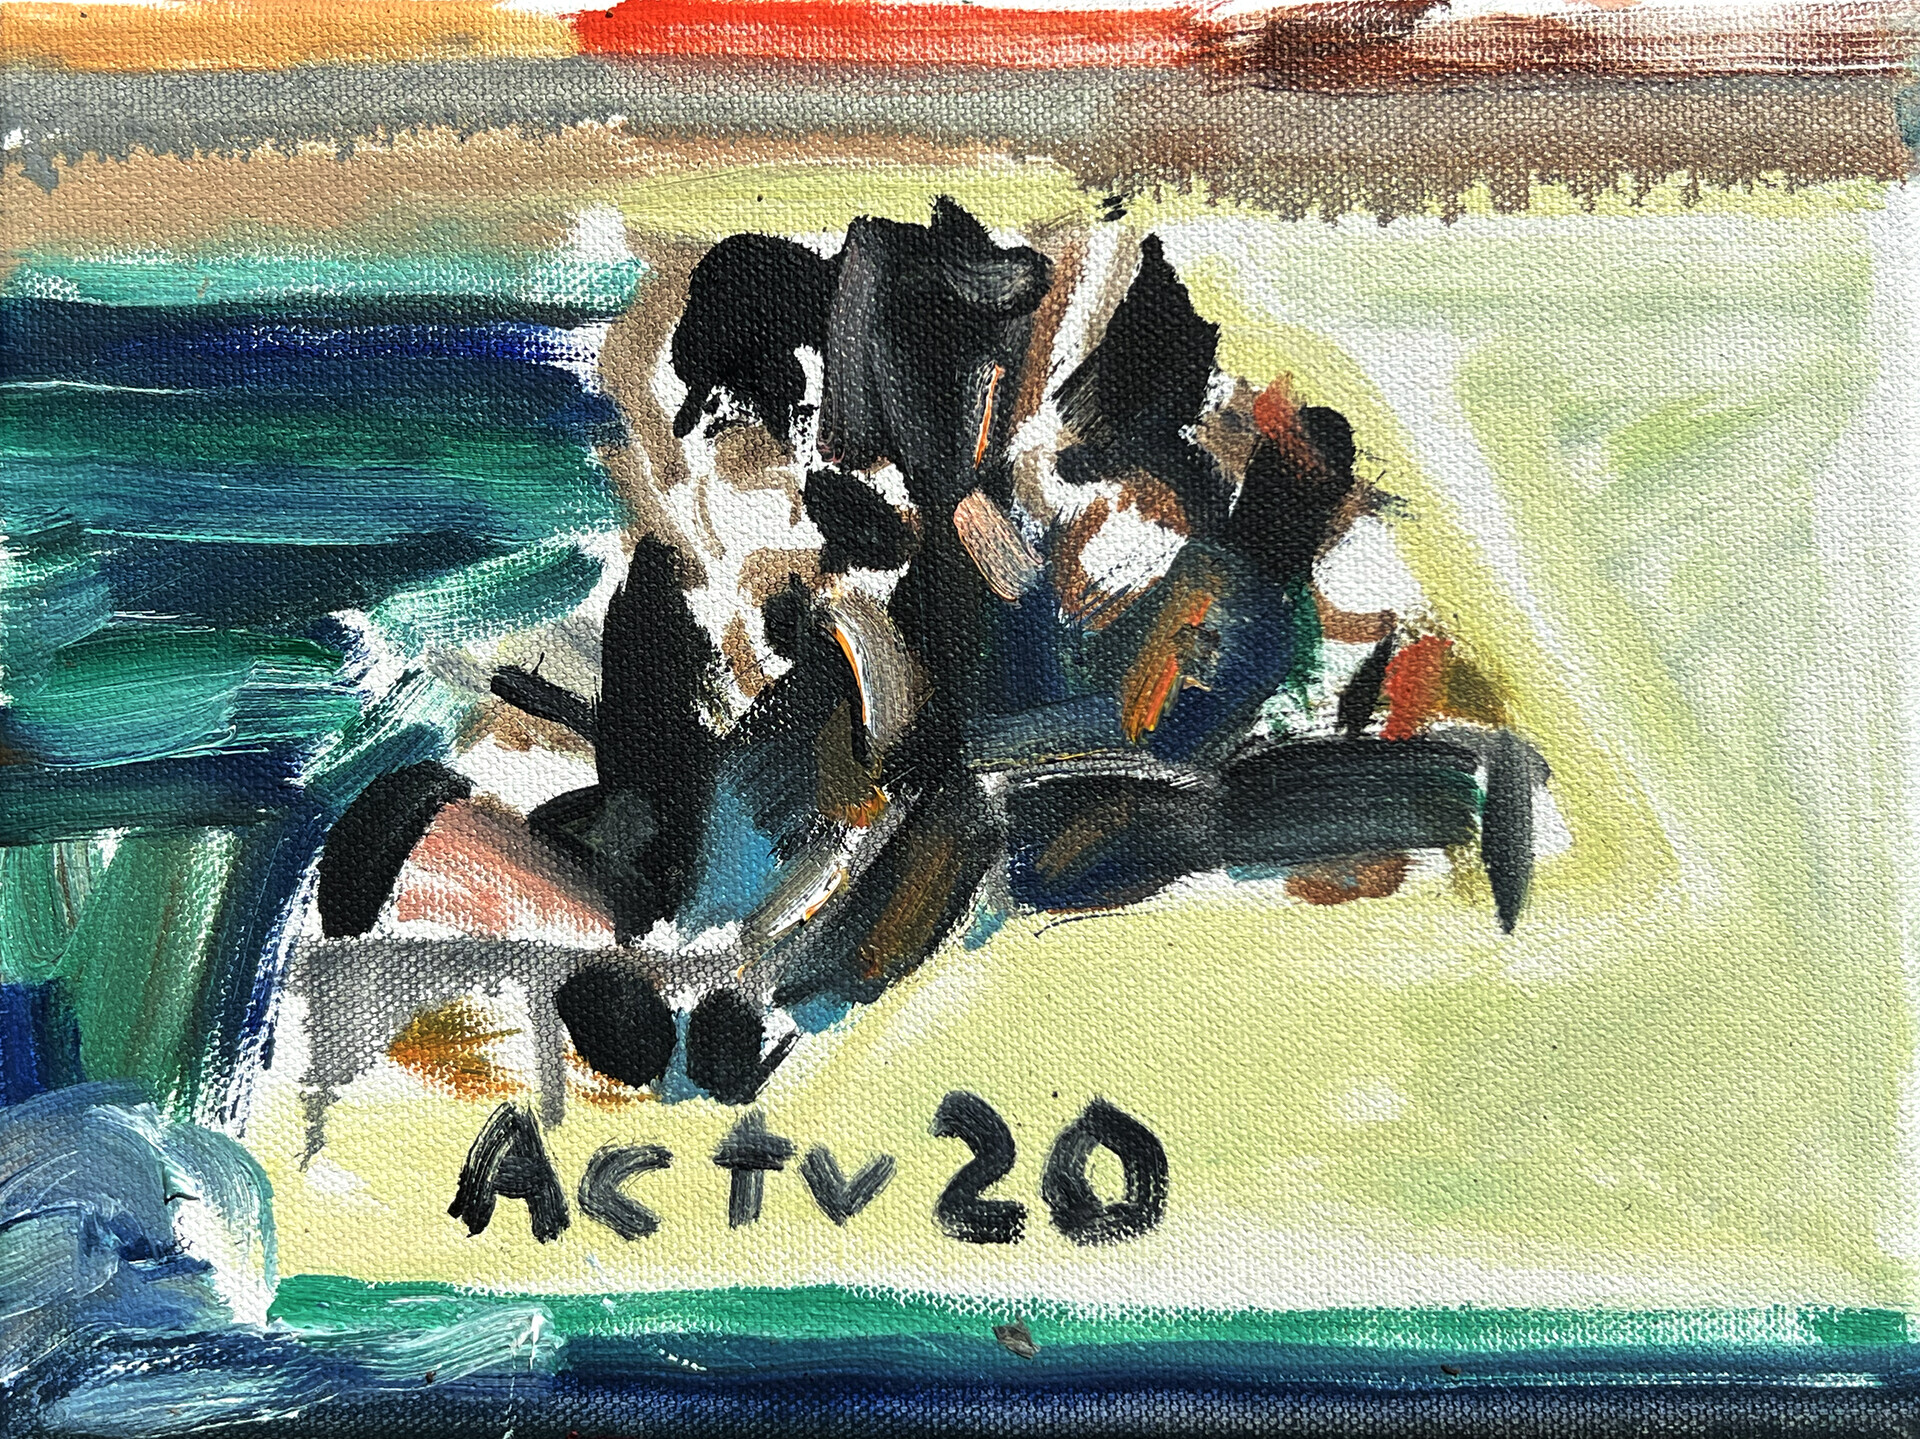 "Venice boat", oil on canvas, 24 x 18 cm, 2022